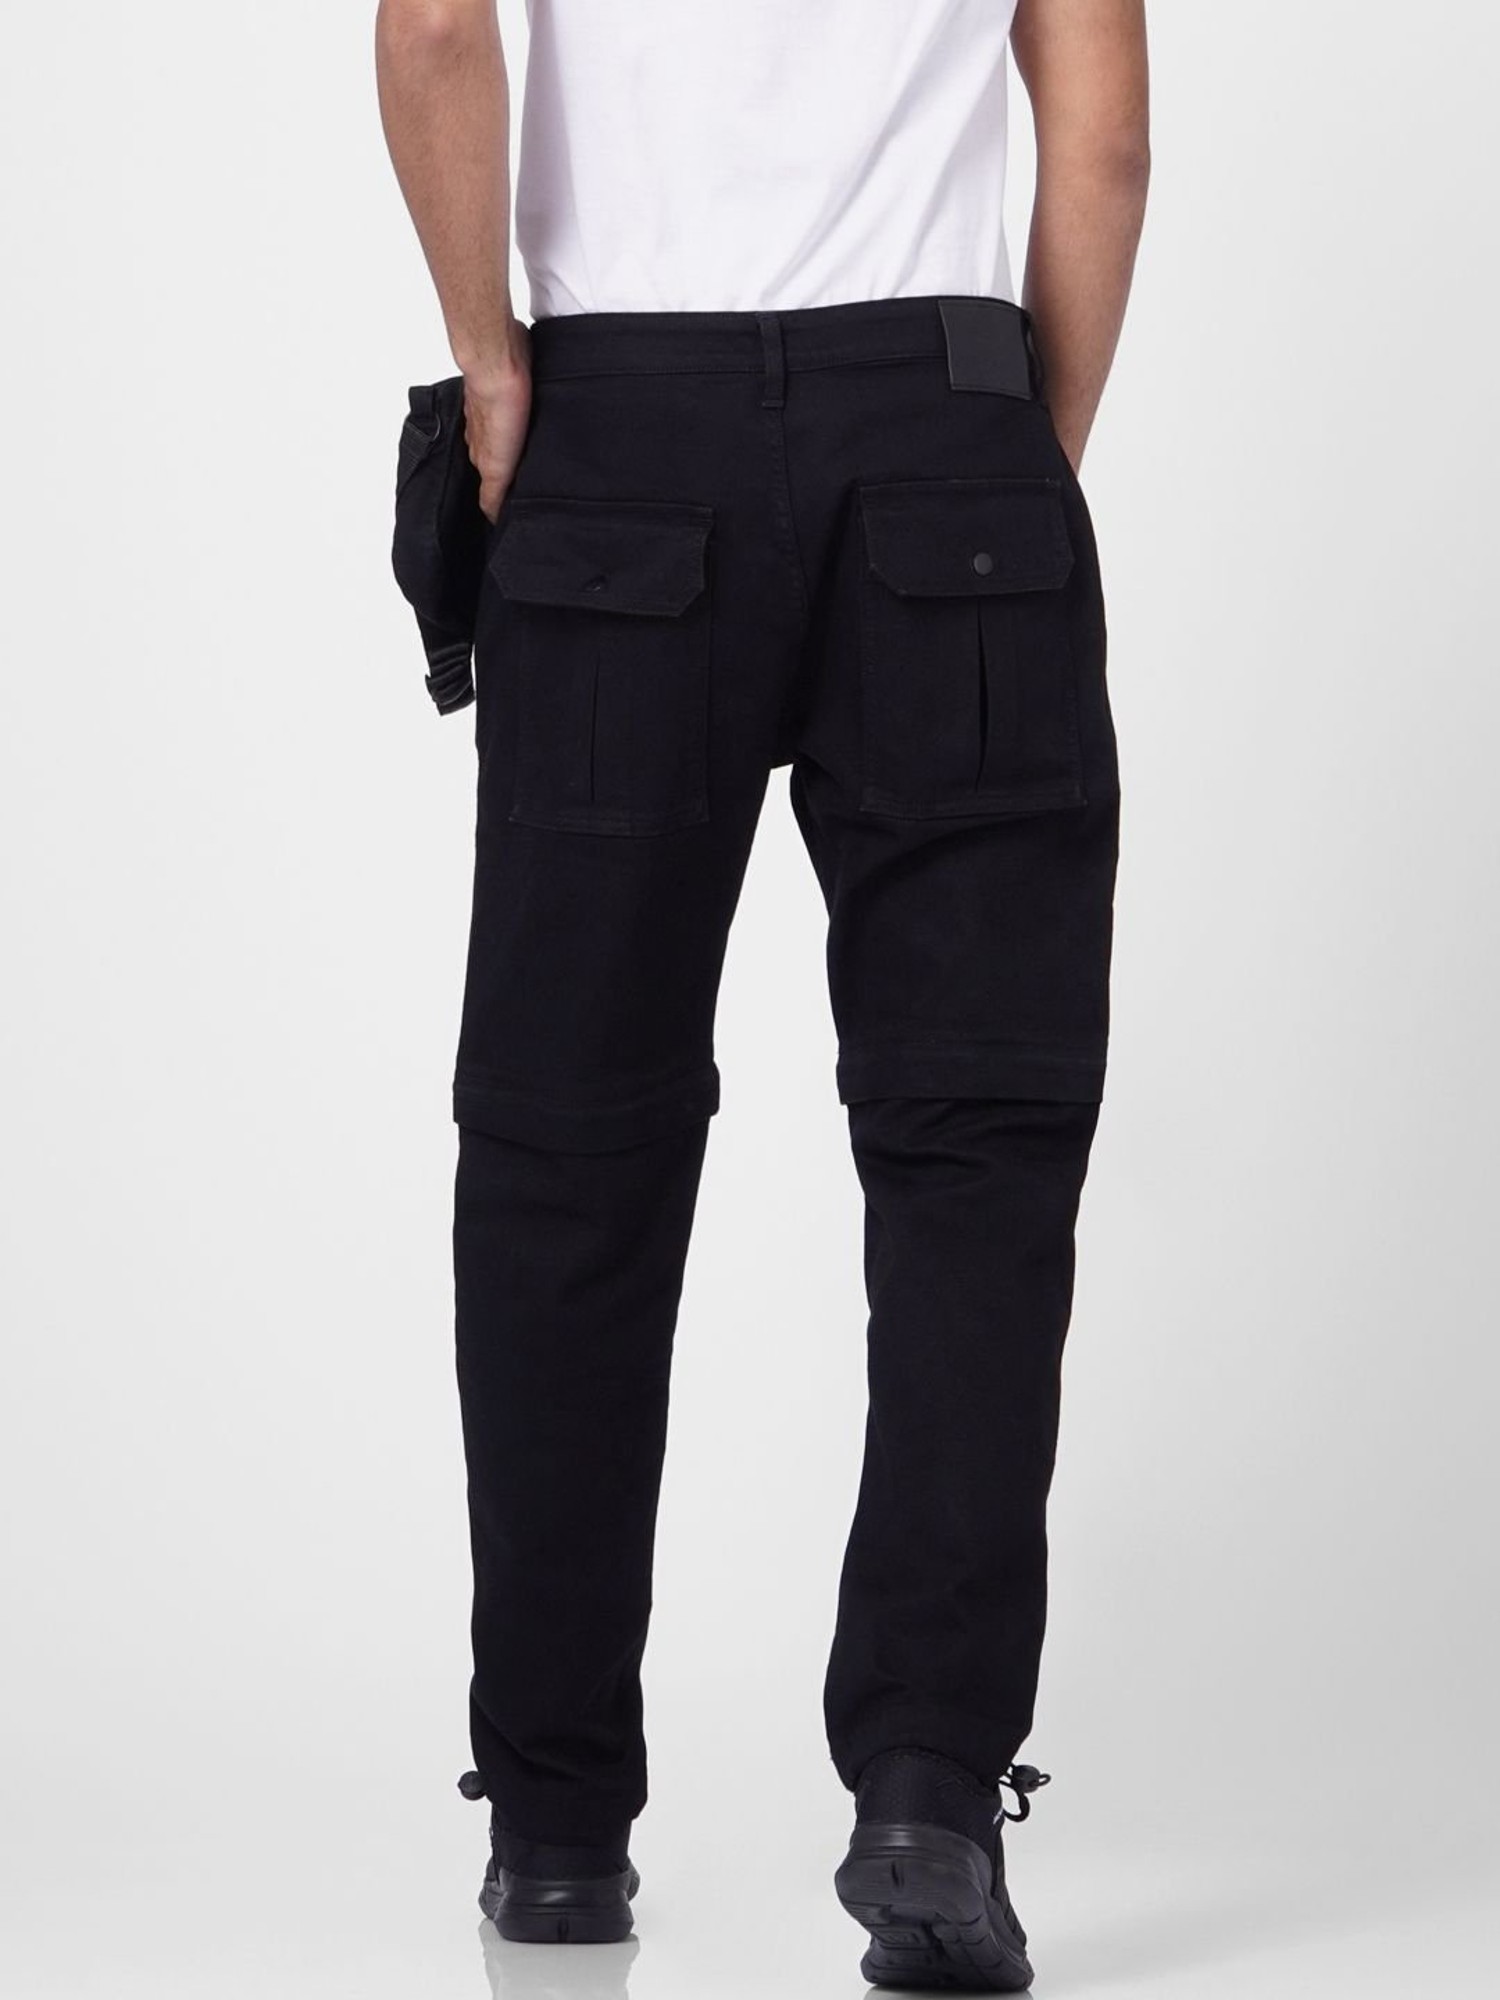 Buy Black Mid Rise Slim Fit Trousers for Men